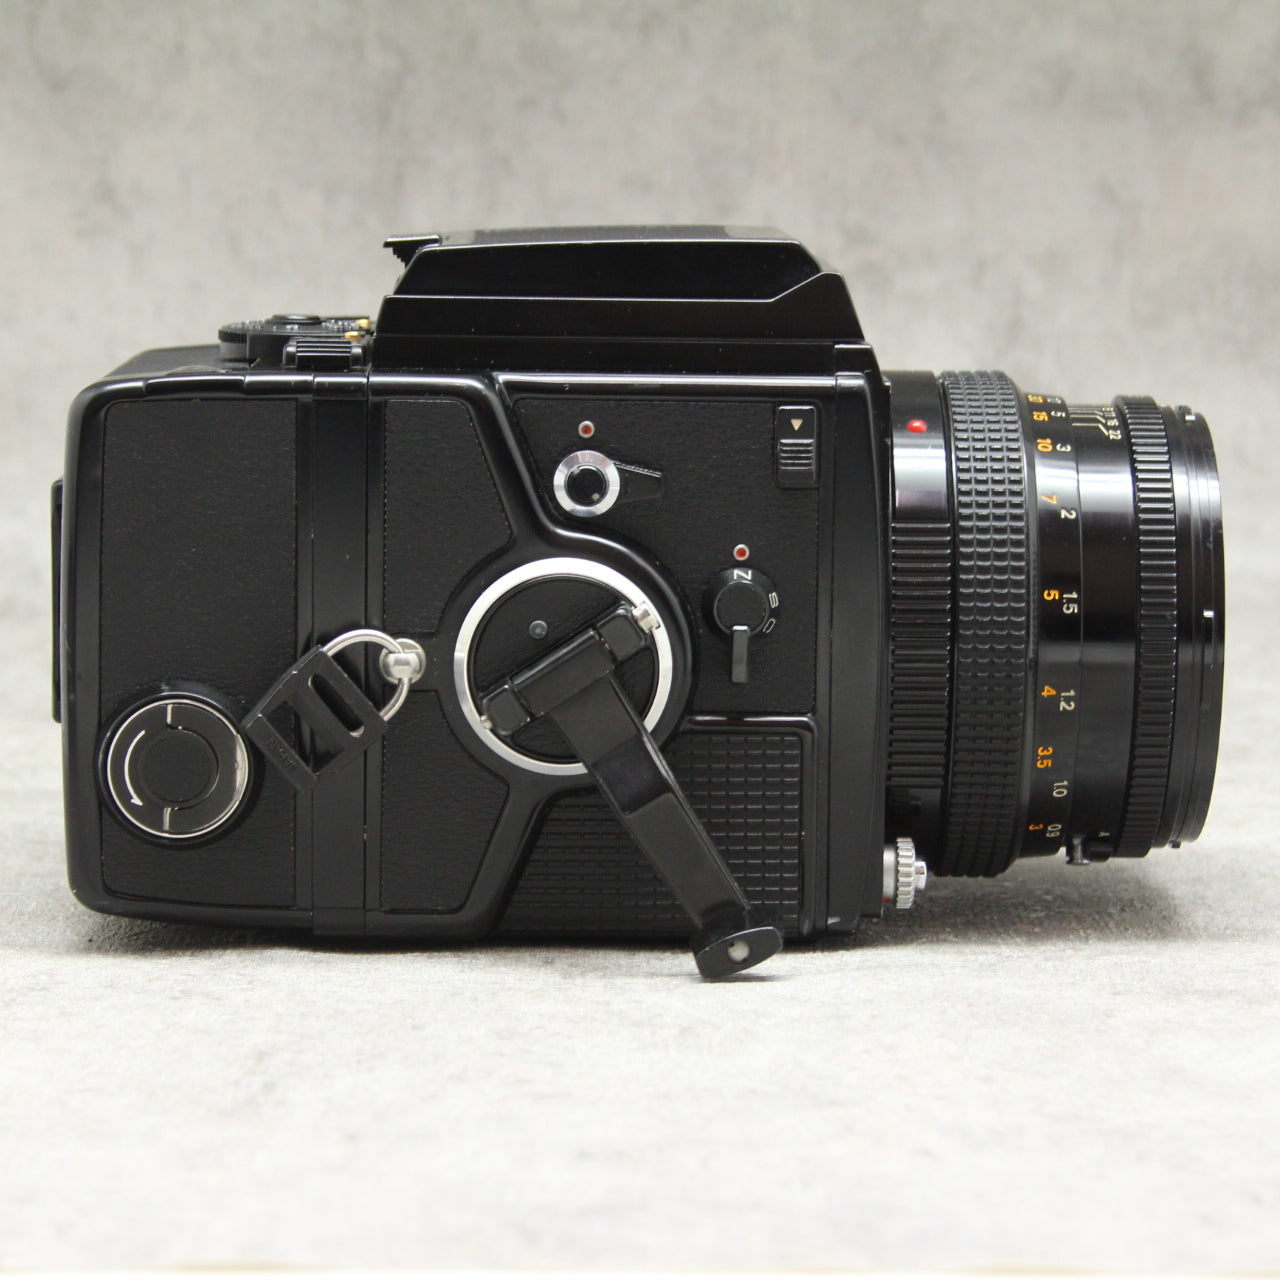 Zenza Bronica ゼンザノン PS 80mm f/2.8 Lens